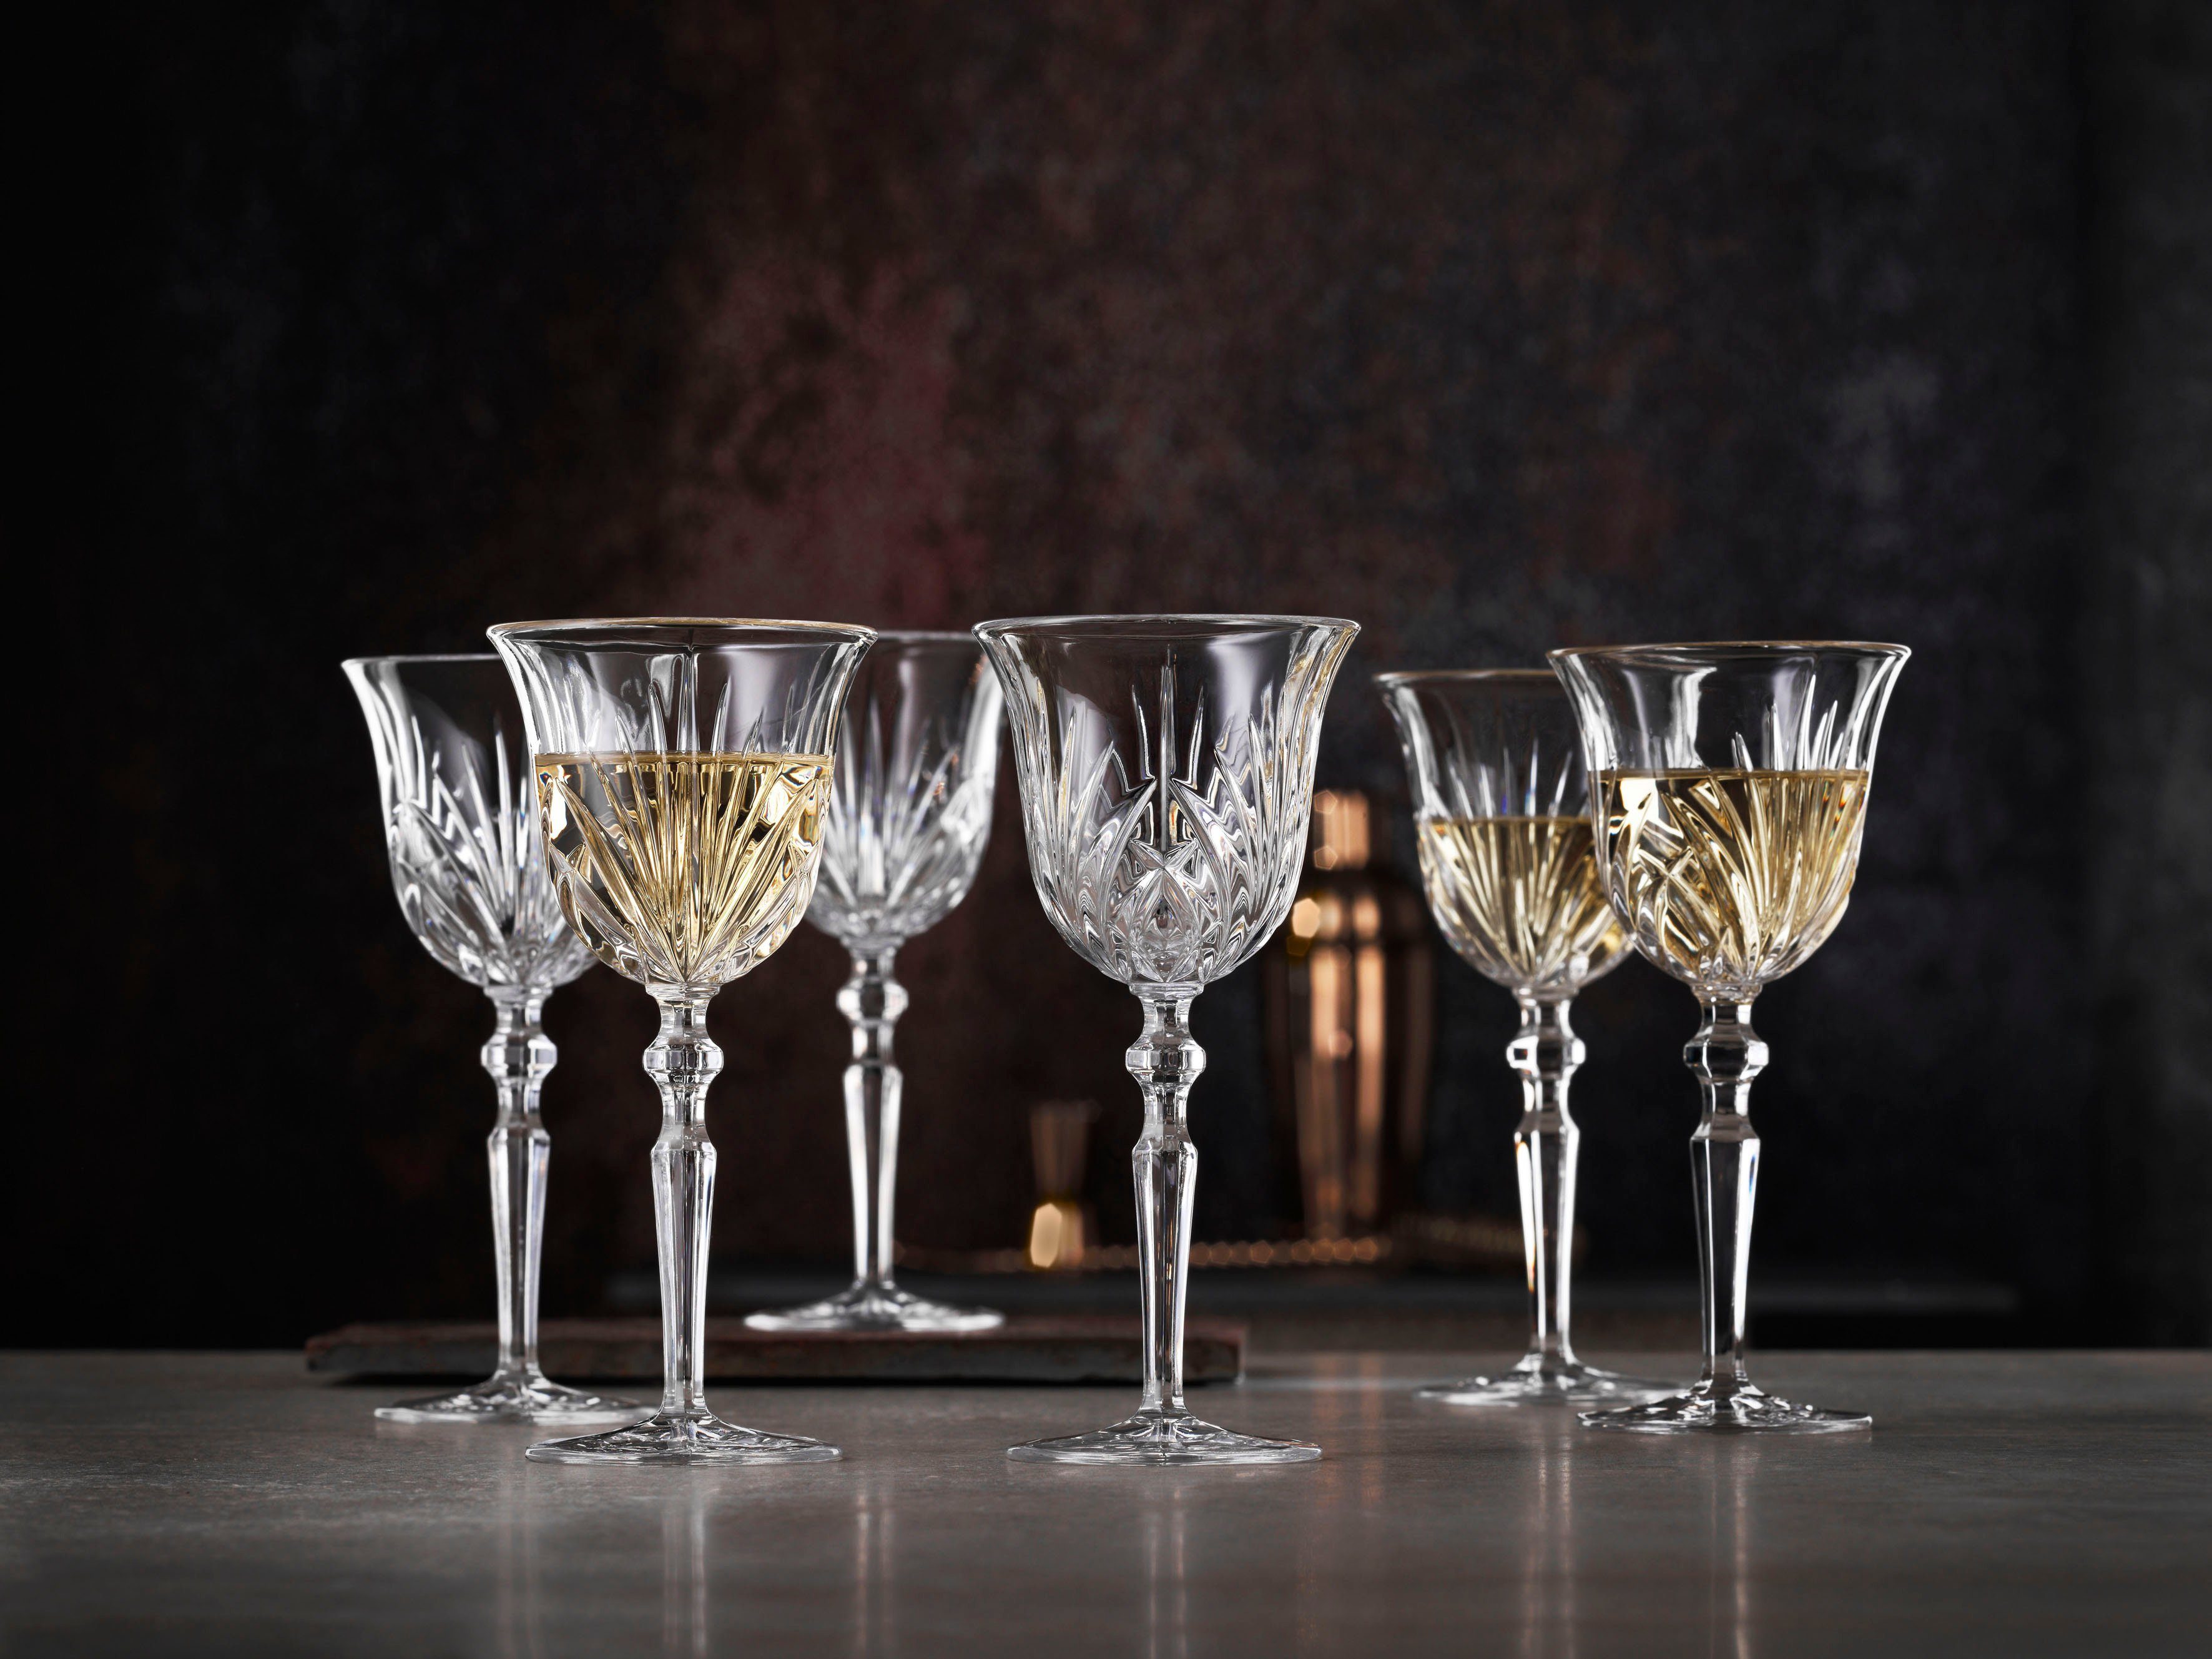 6-teilig Weißweinglas Kristallglas, ml, Palais, Nachtmann 180